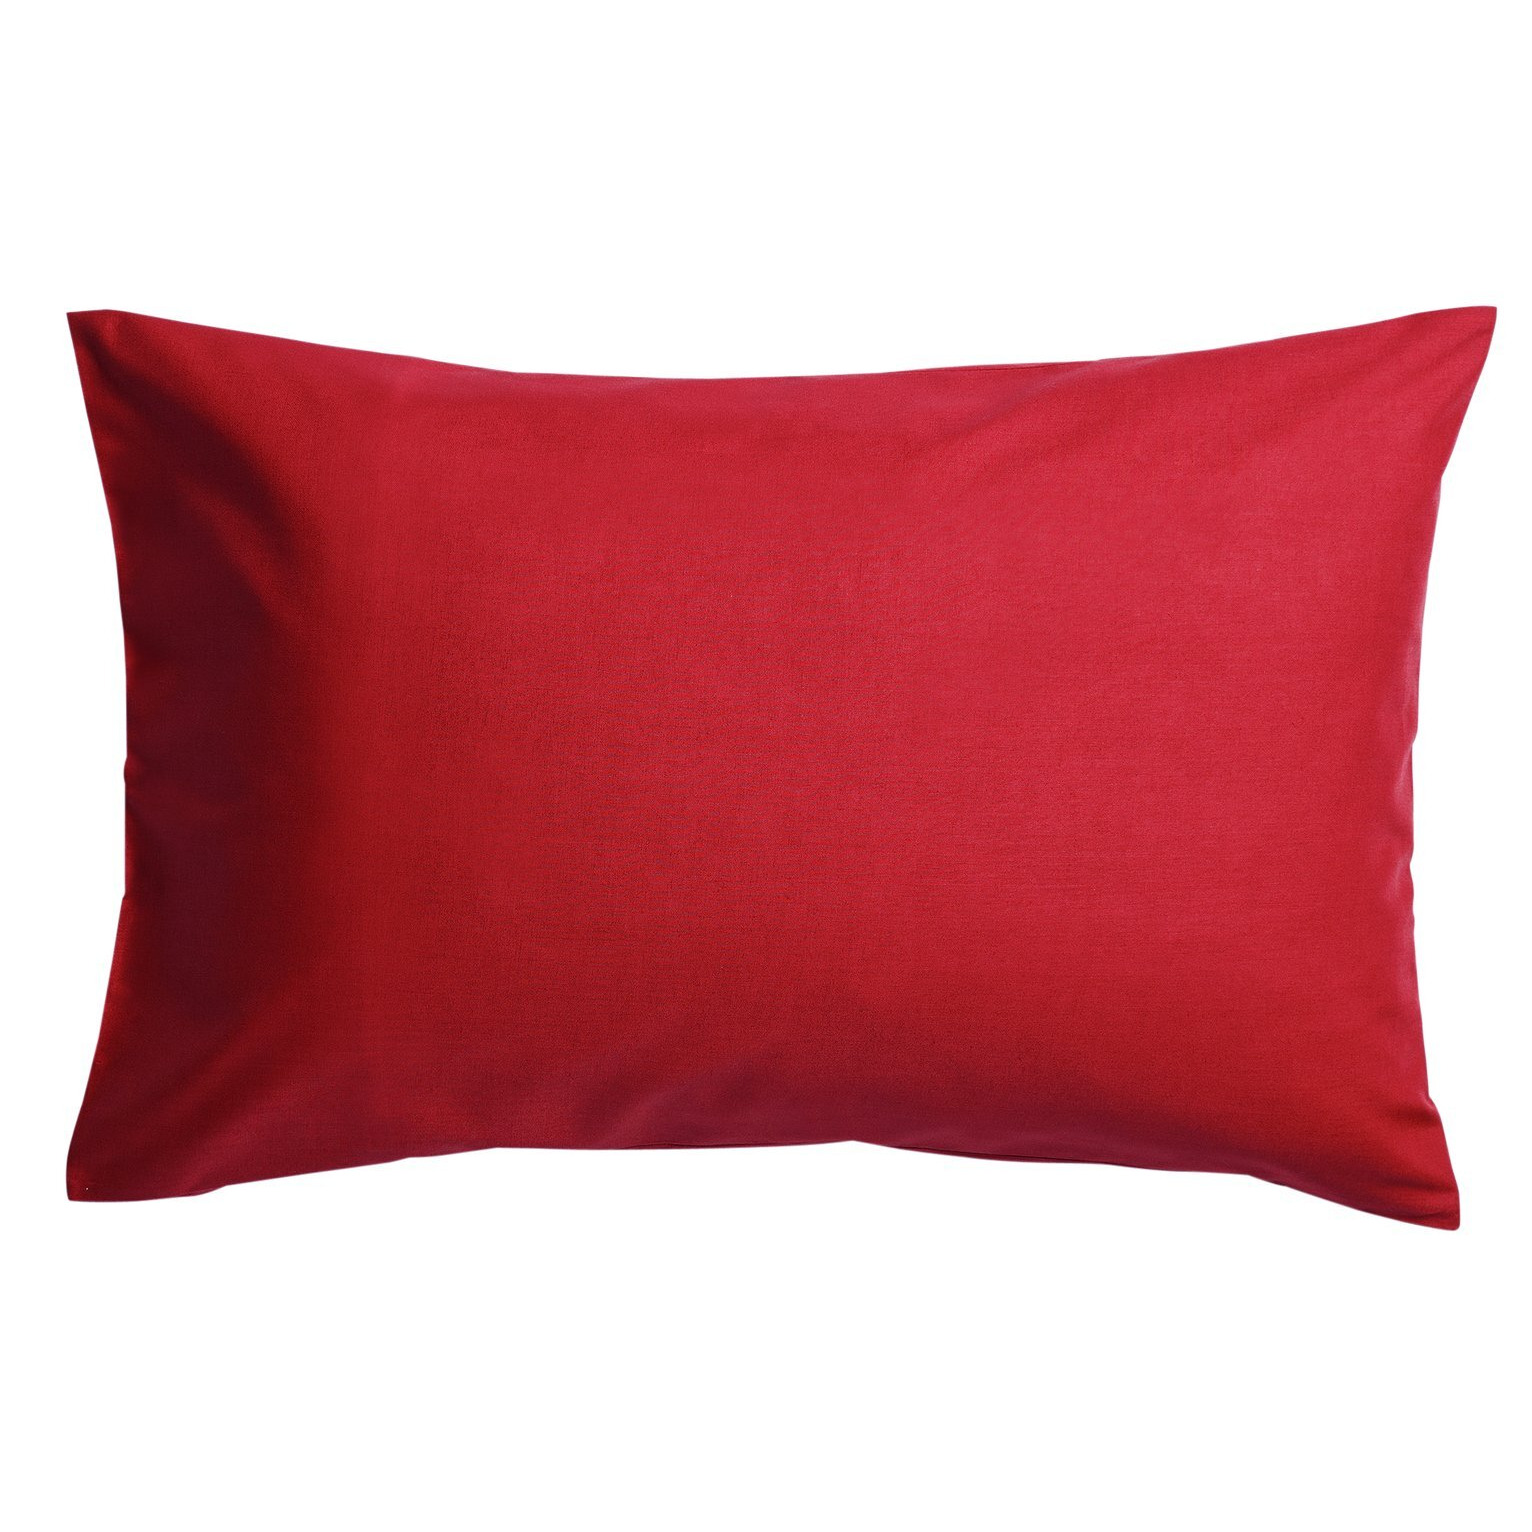 Habitat Easycare Polycotton Standard Pillowcase Pair - Red - image 1